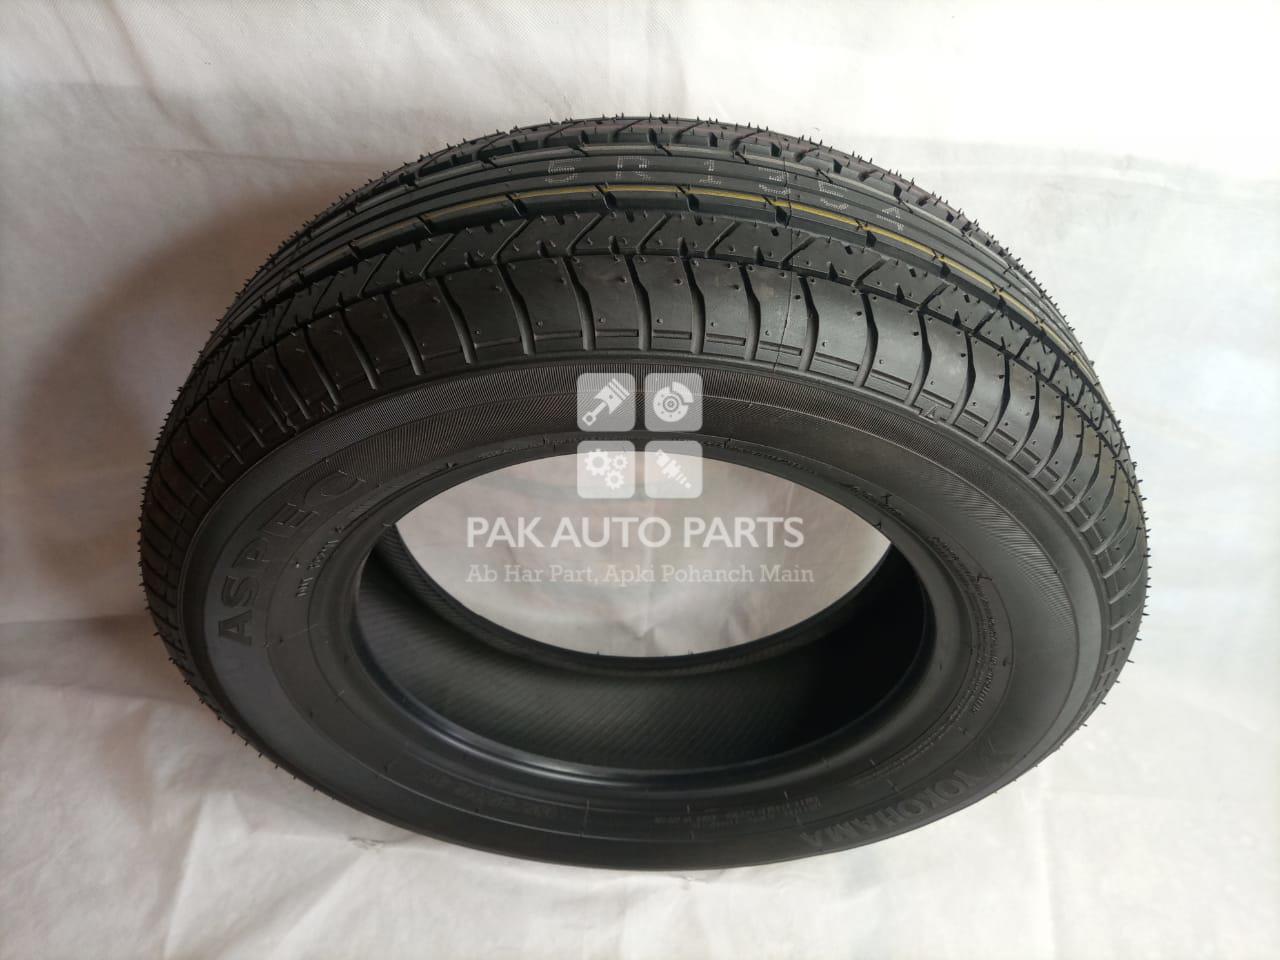 Picture of Yokohama Aspec Six Palai Tyre 195/65 R15 1pcs